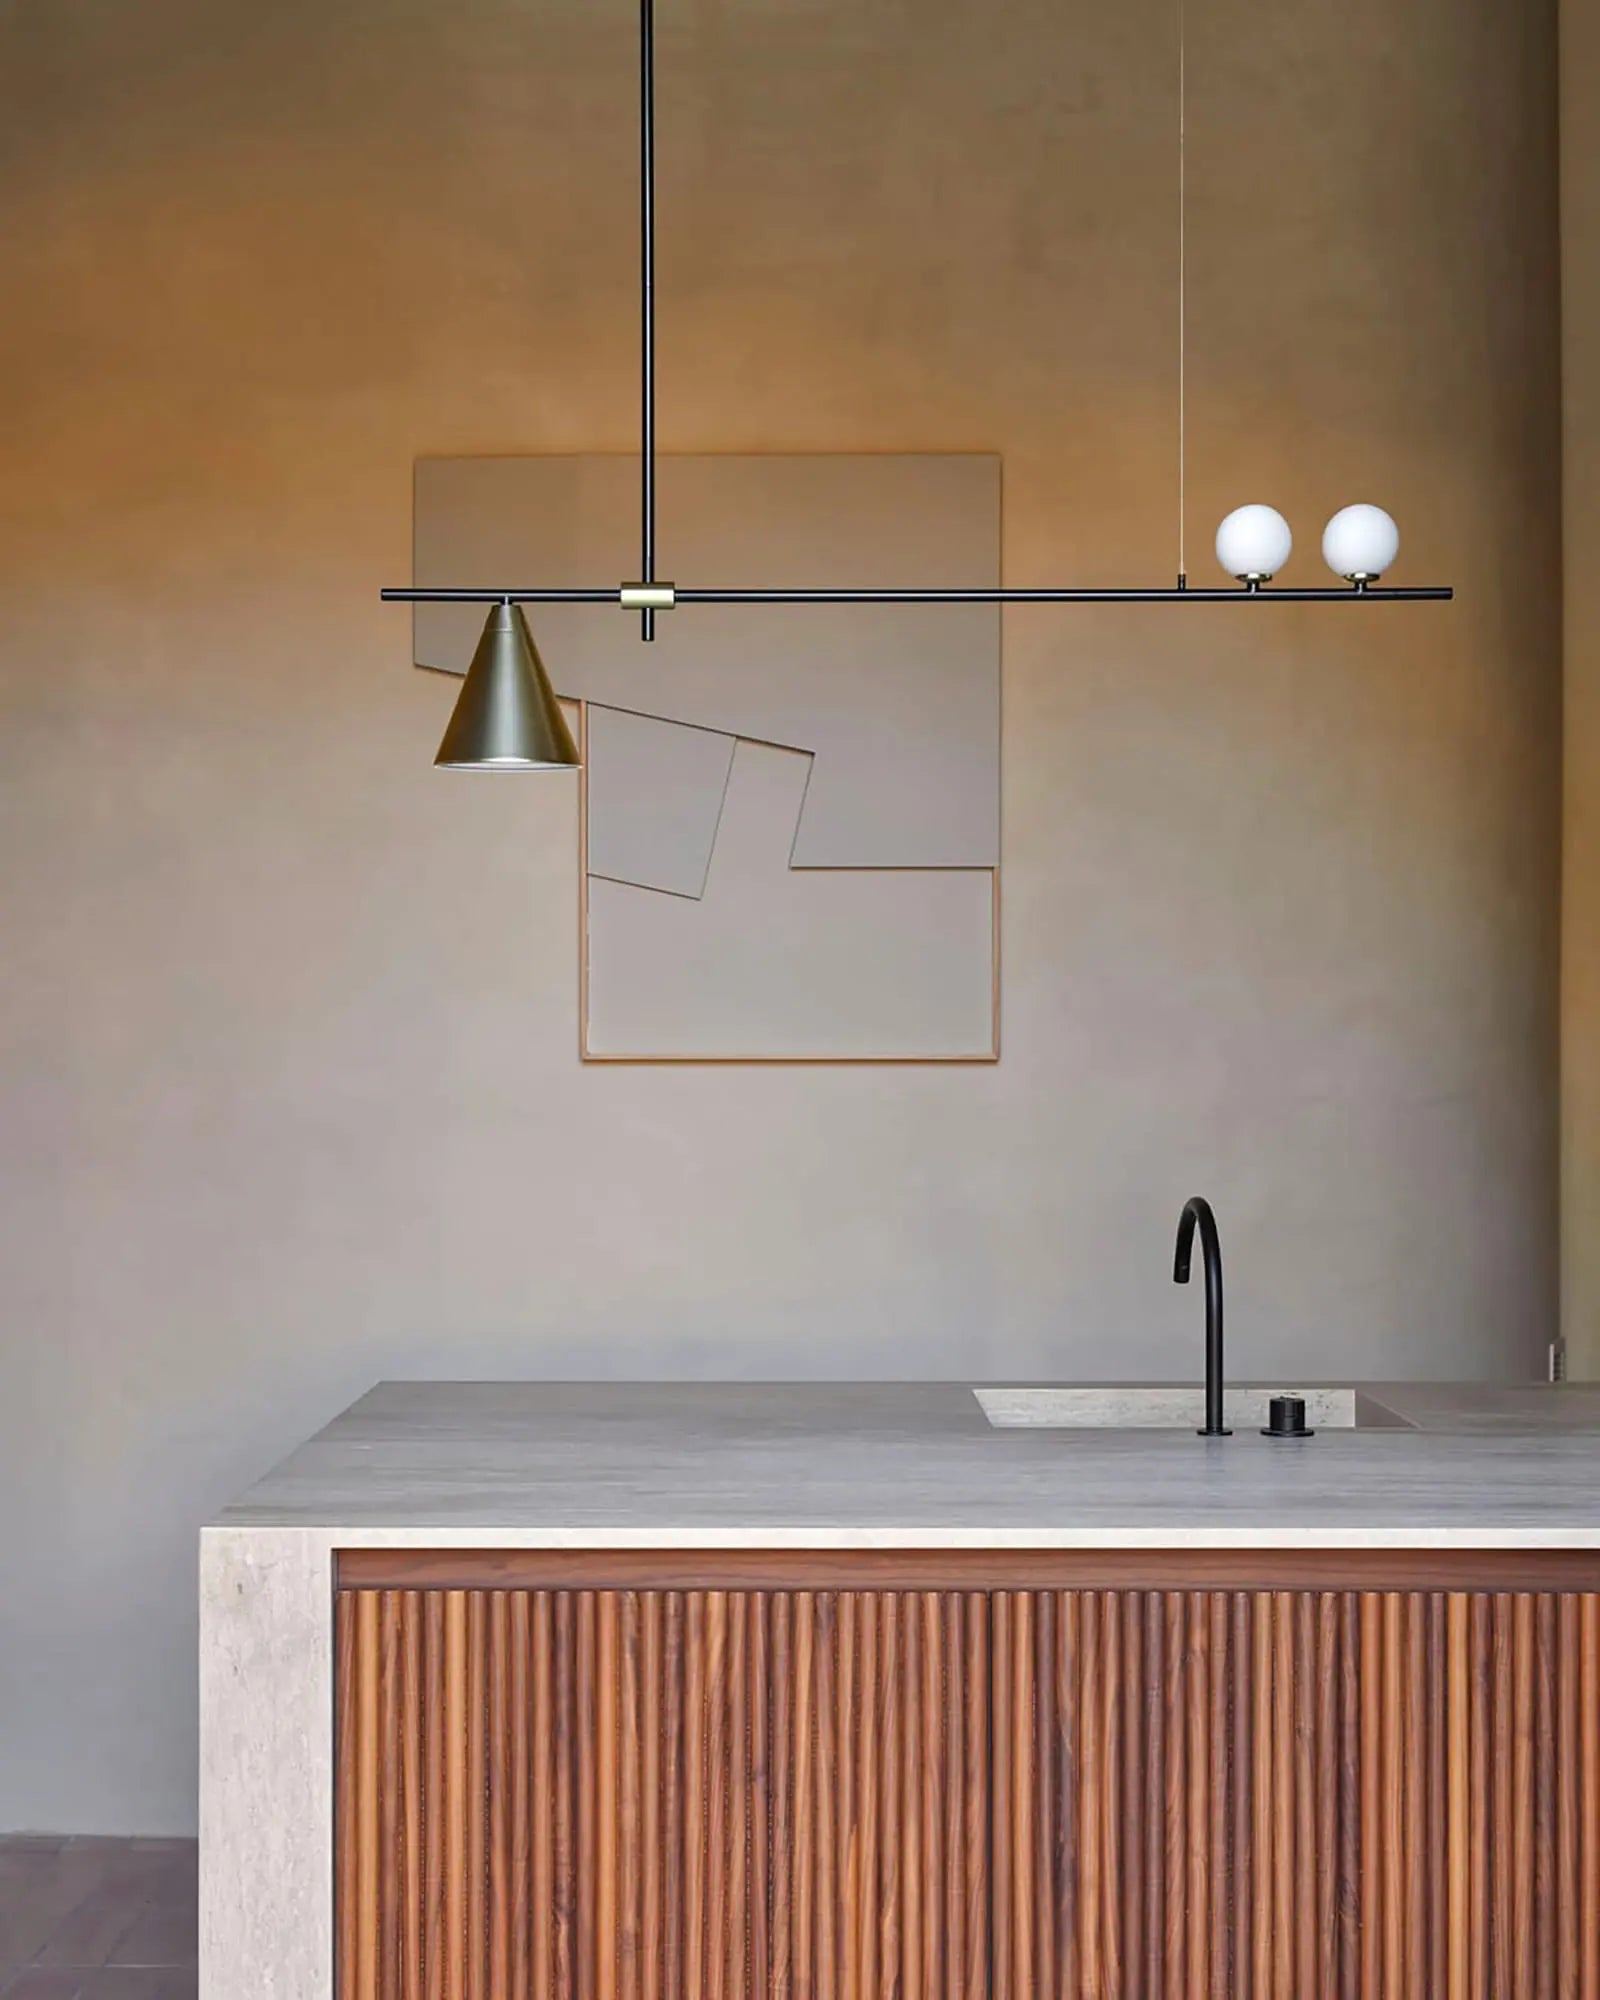 Crane contemporary geometrical linear pendant light above a kitchen island